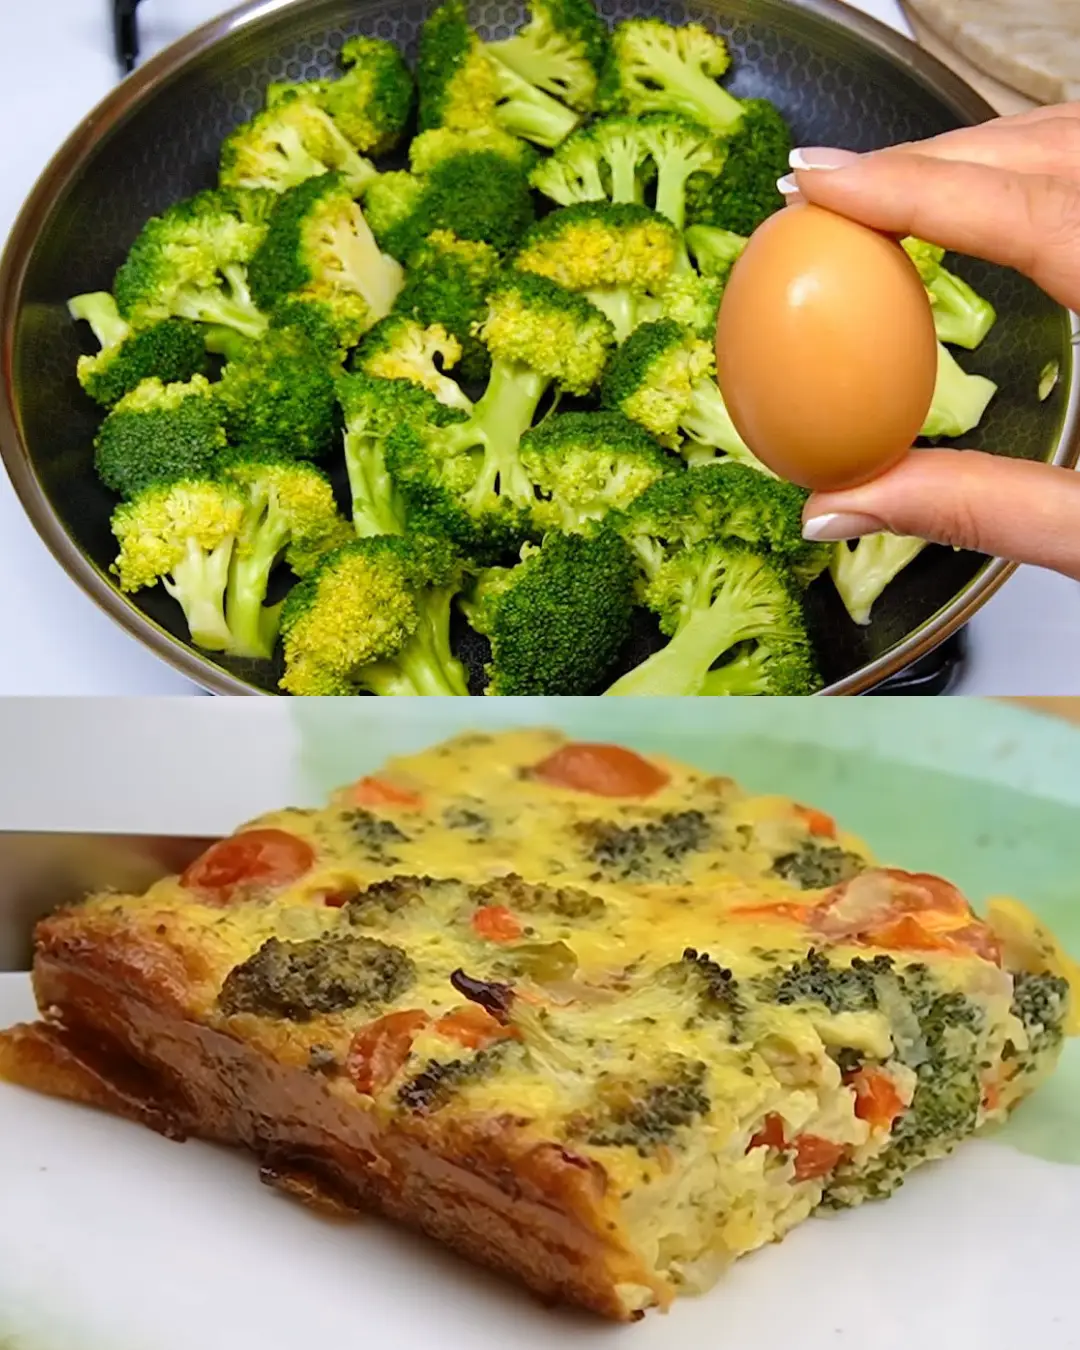 Freshly baked Healthy Broccoli Egg Bake Casserole in a dish